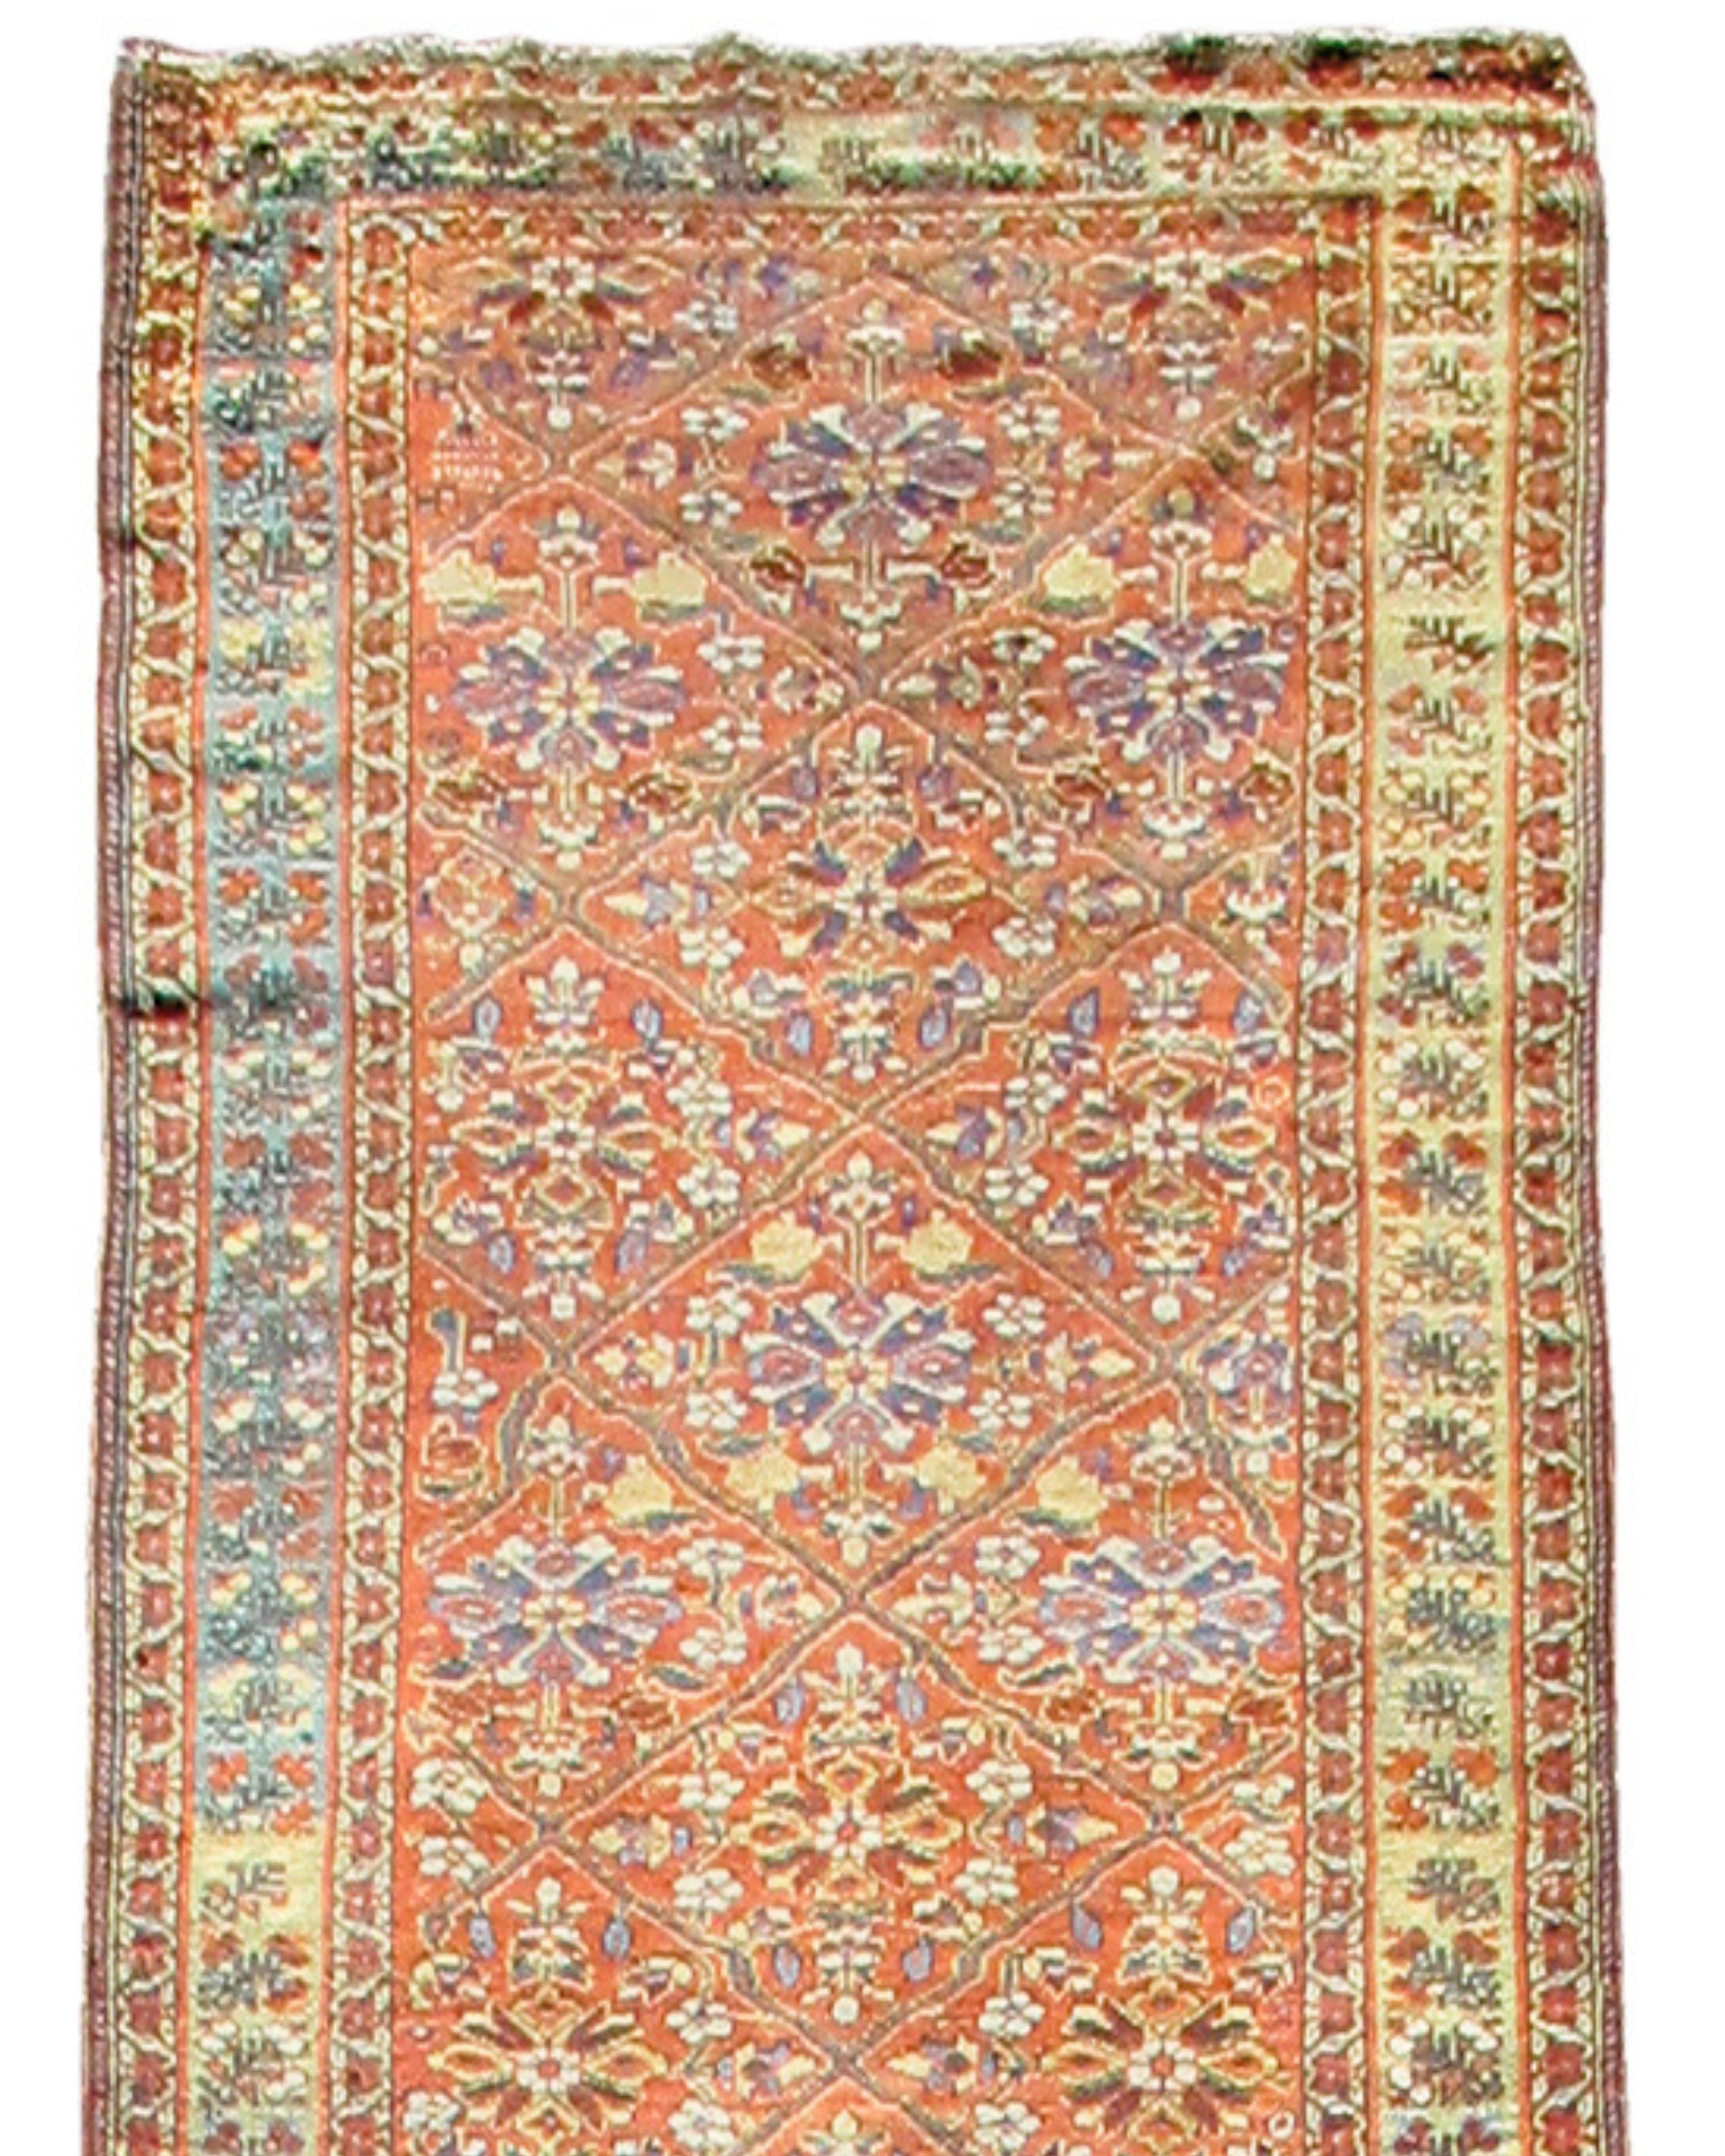 Antique Persian Kurdish Runner Rug, 19th Century

Additional information:
Dimensions: 3'9